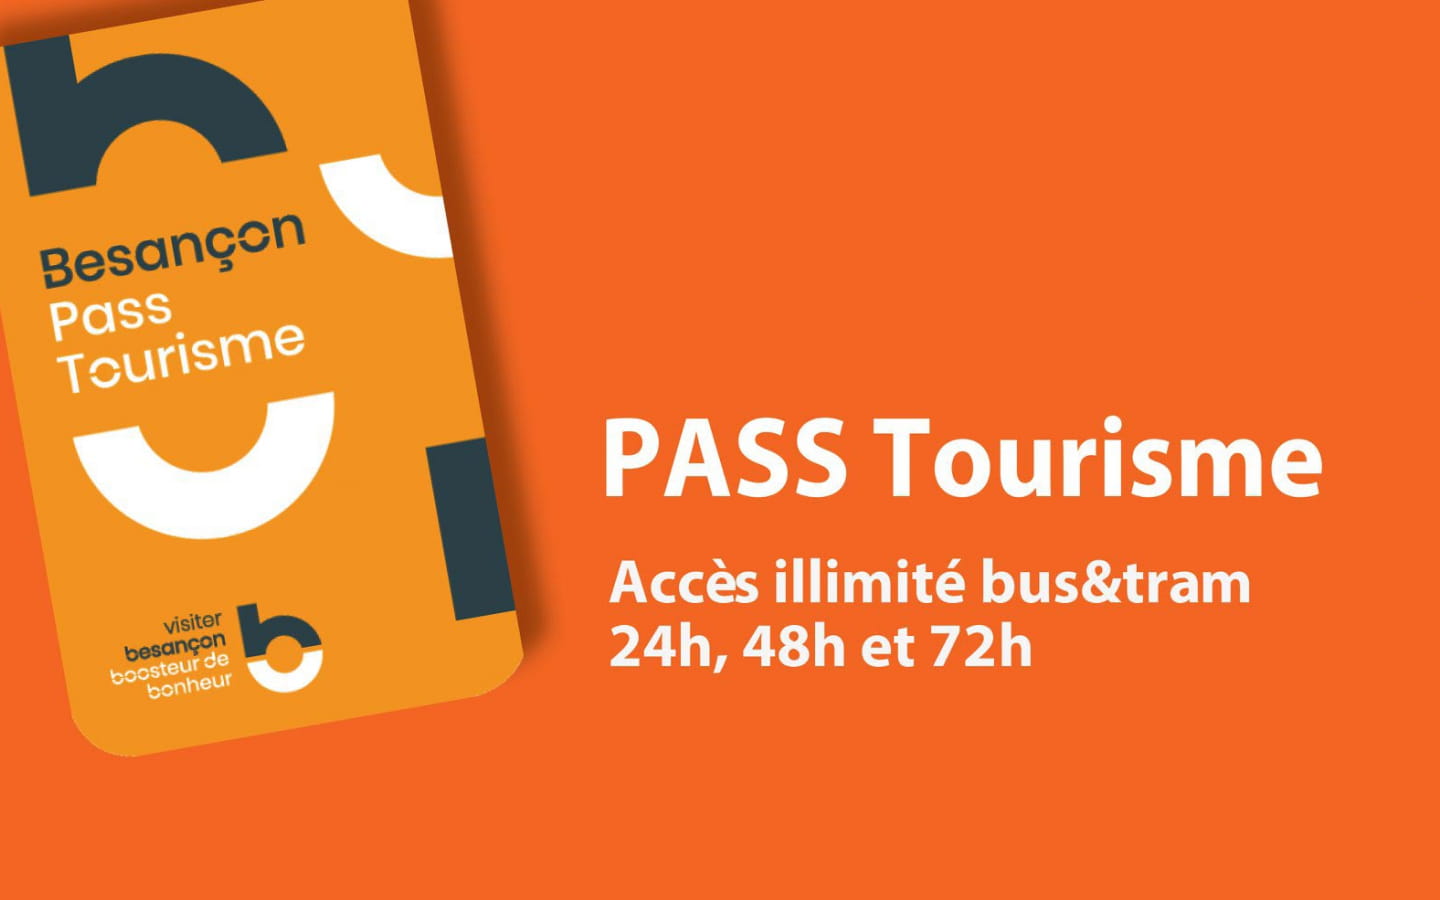 Besançon pass tourisme